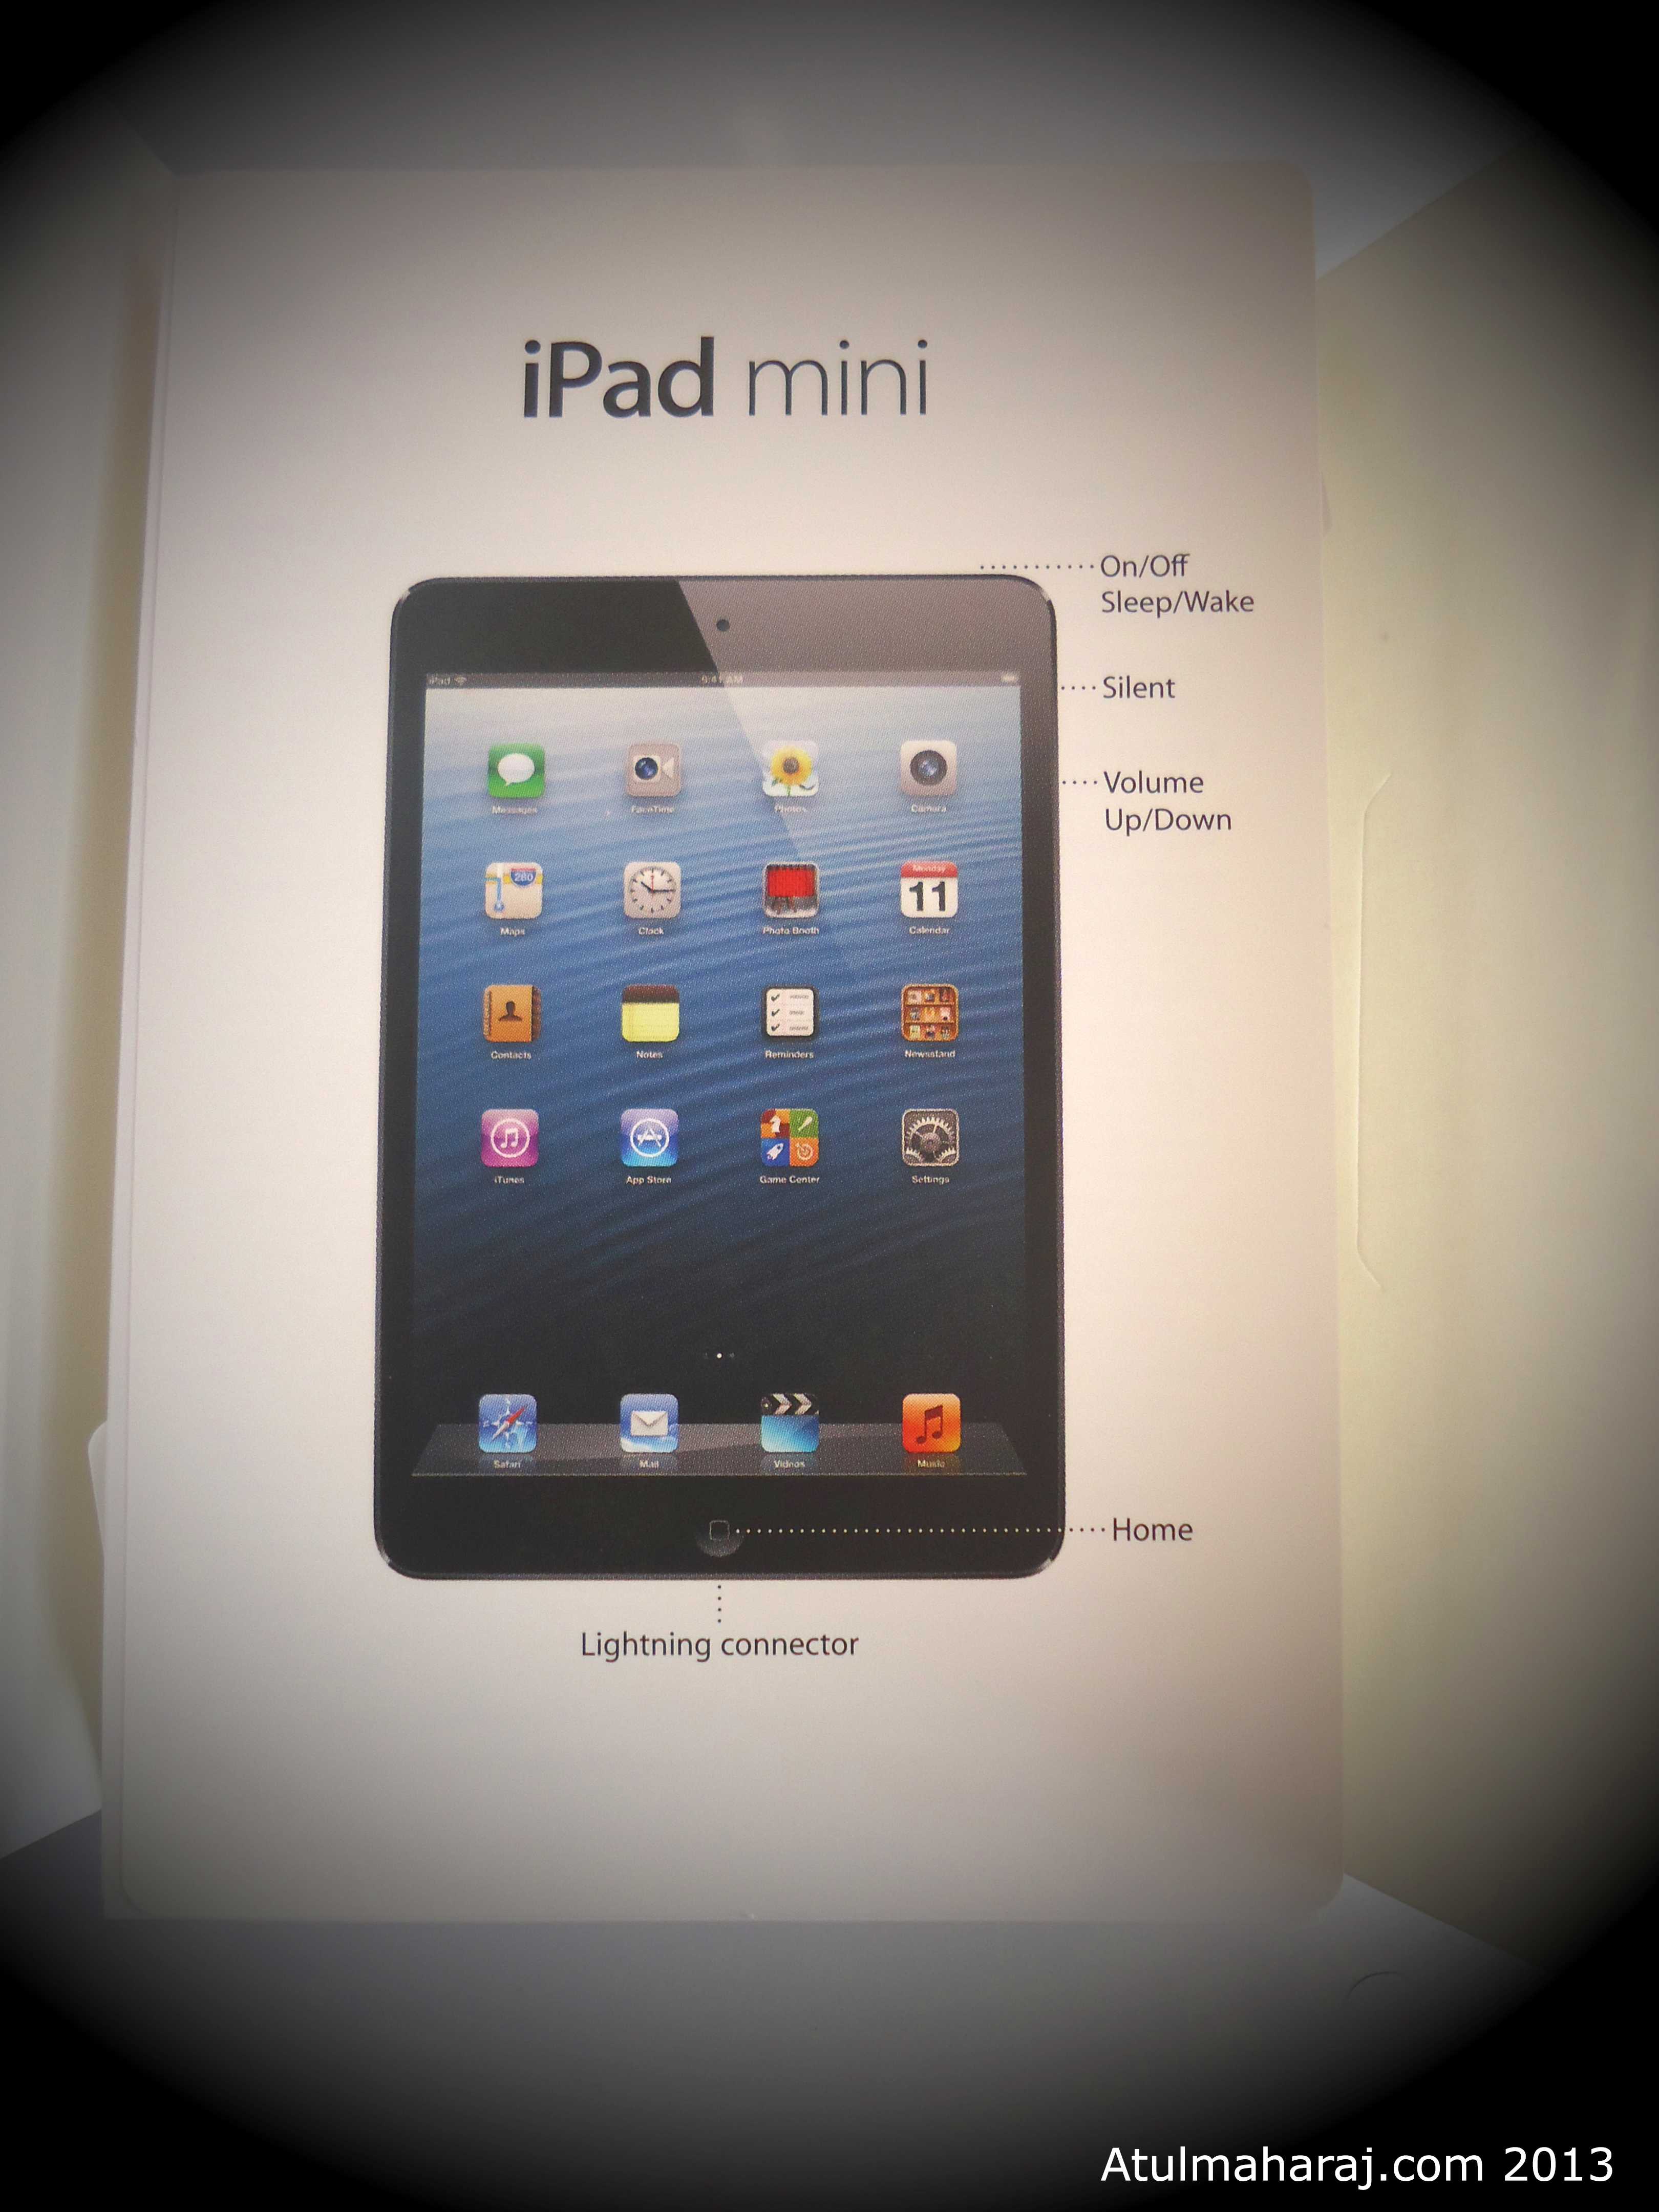 iPad Mini catalog.